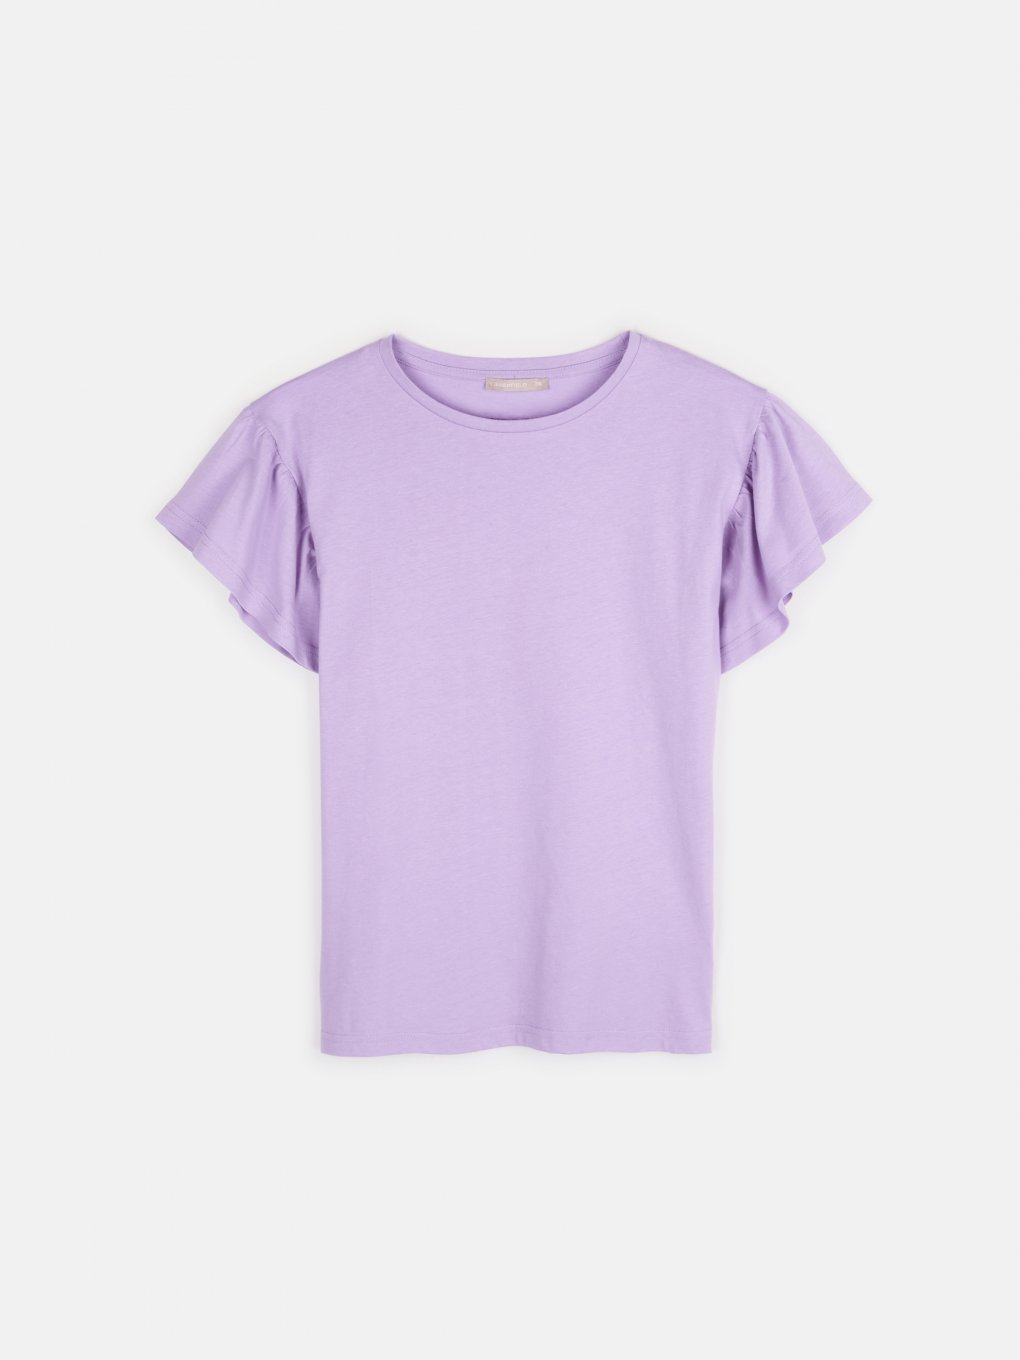 Едноцветна дамска риза с волан